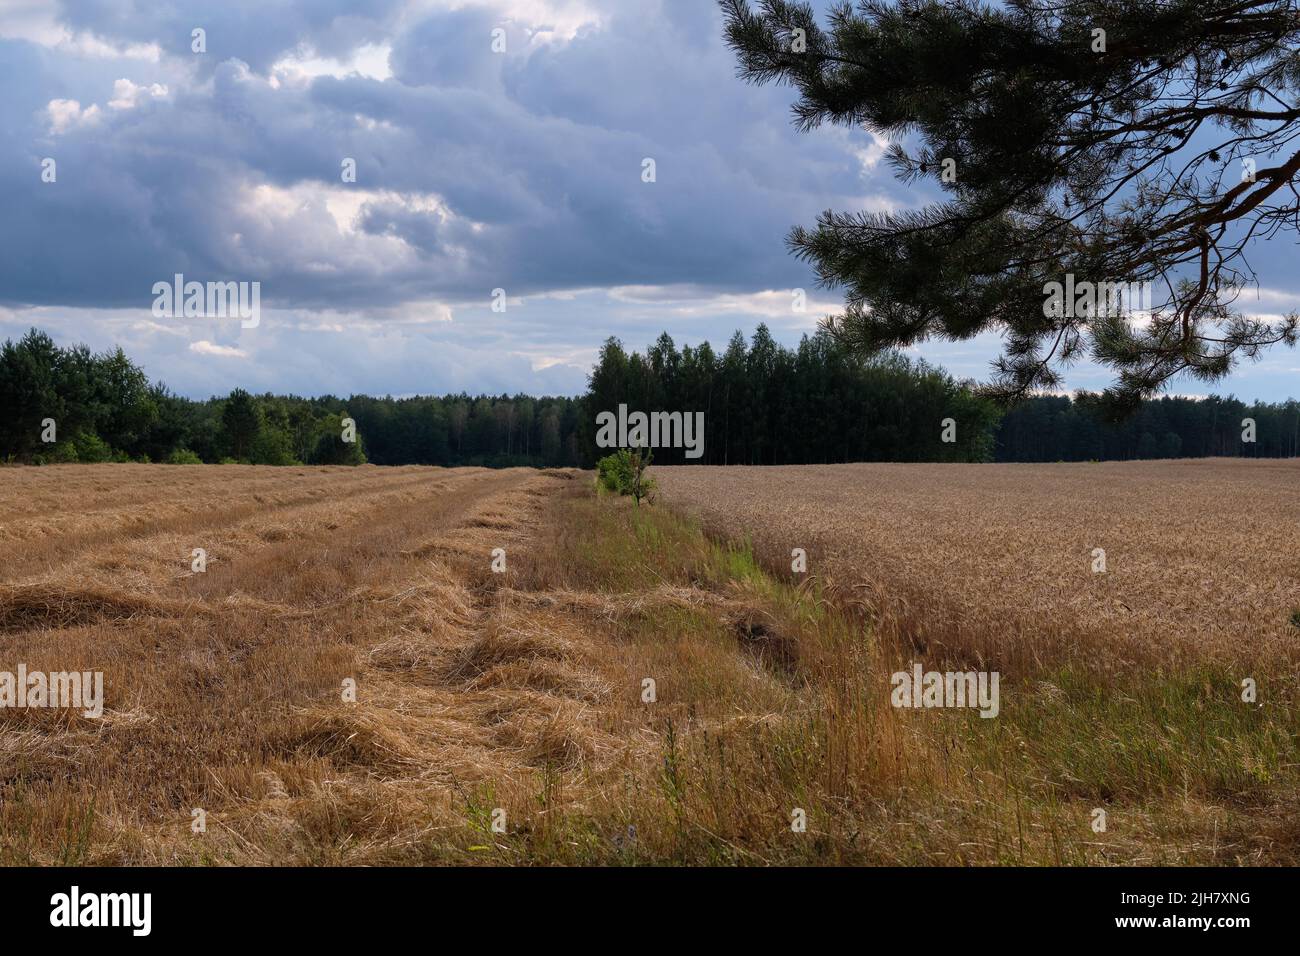 Rye field in sunset light under cloudy sky in summer, podlaskie Voivodship, Poland, Europe Stock Photo